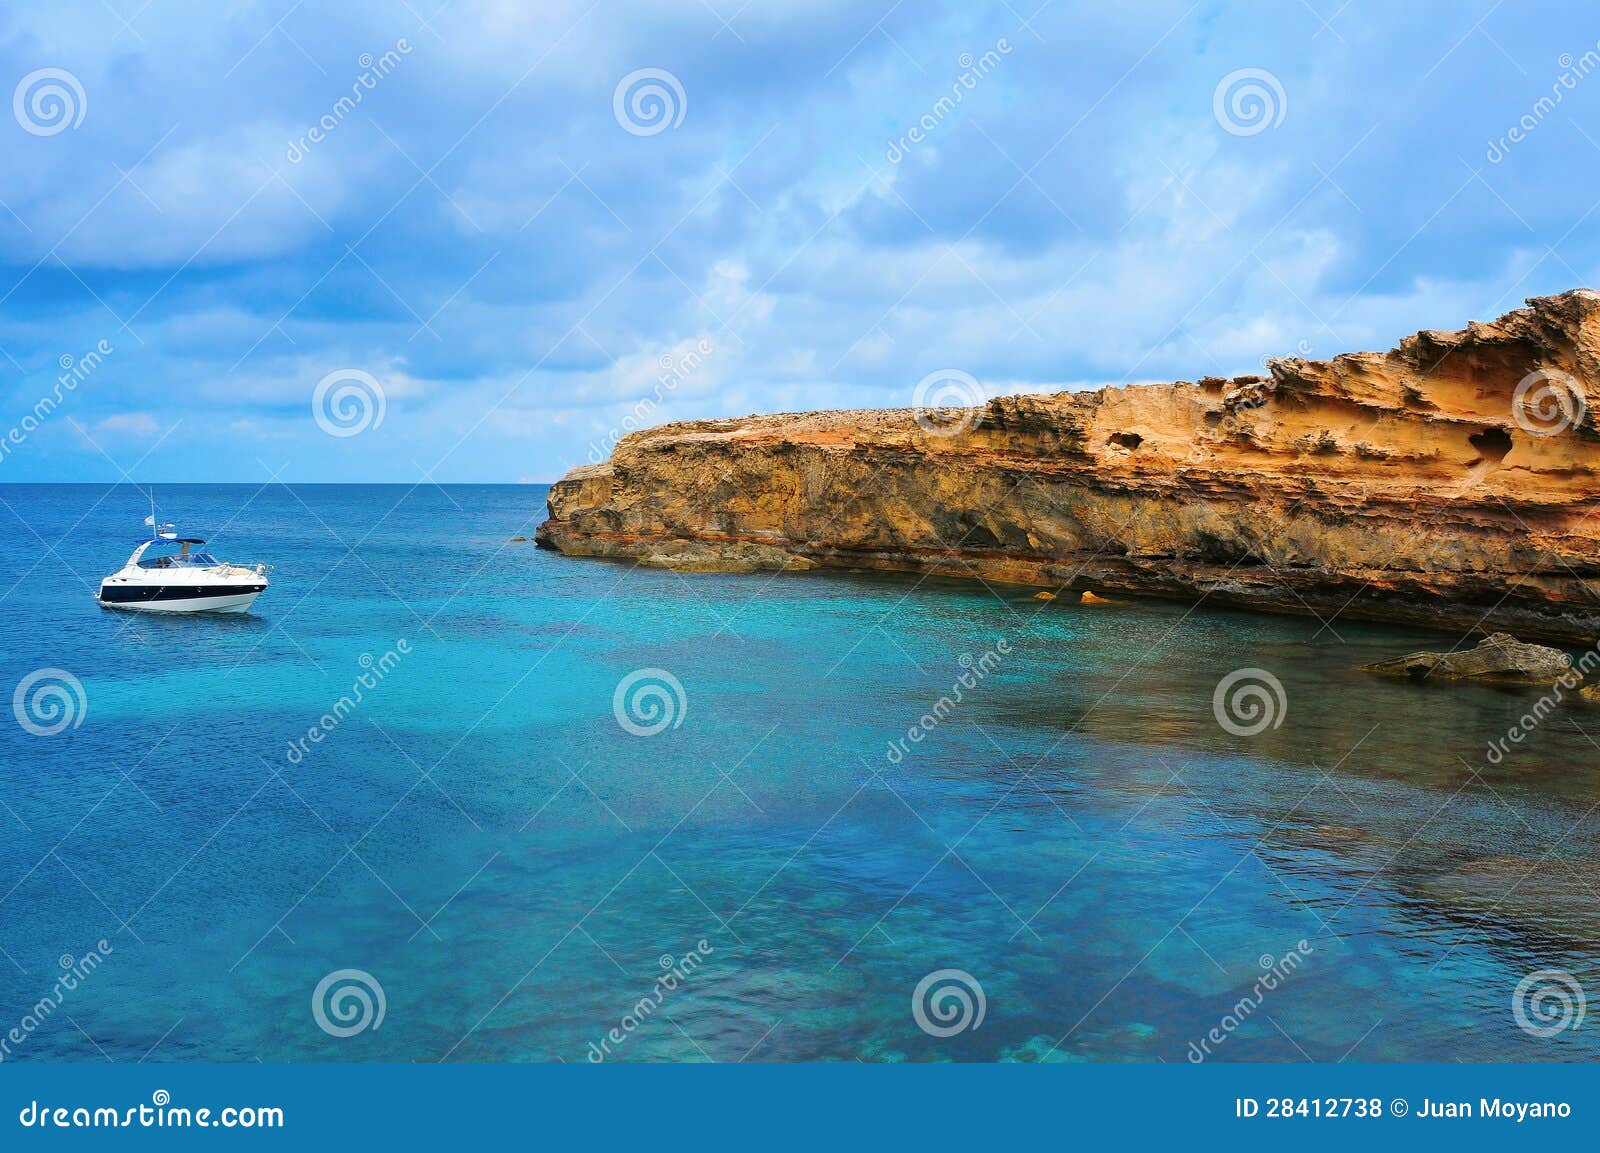 punta de sa pedrera coast in formentera, balearic islands, spain